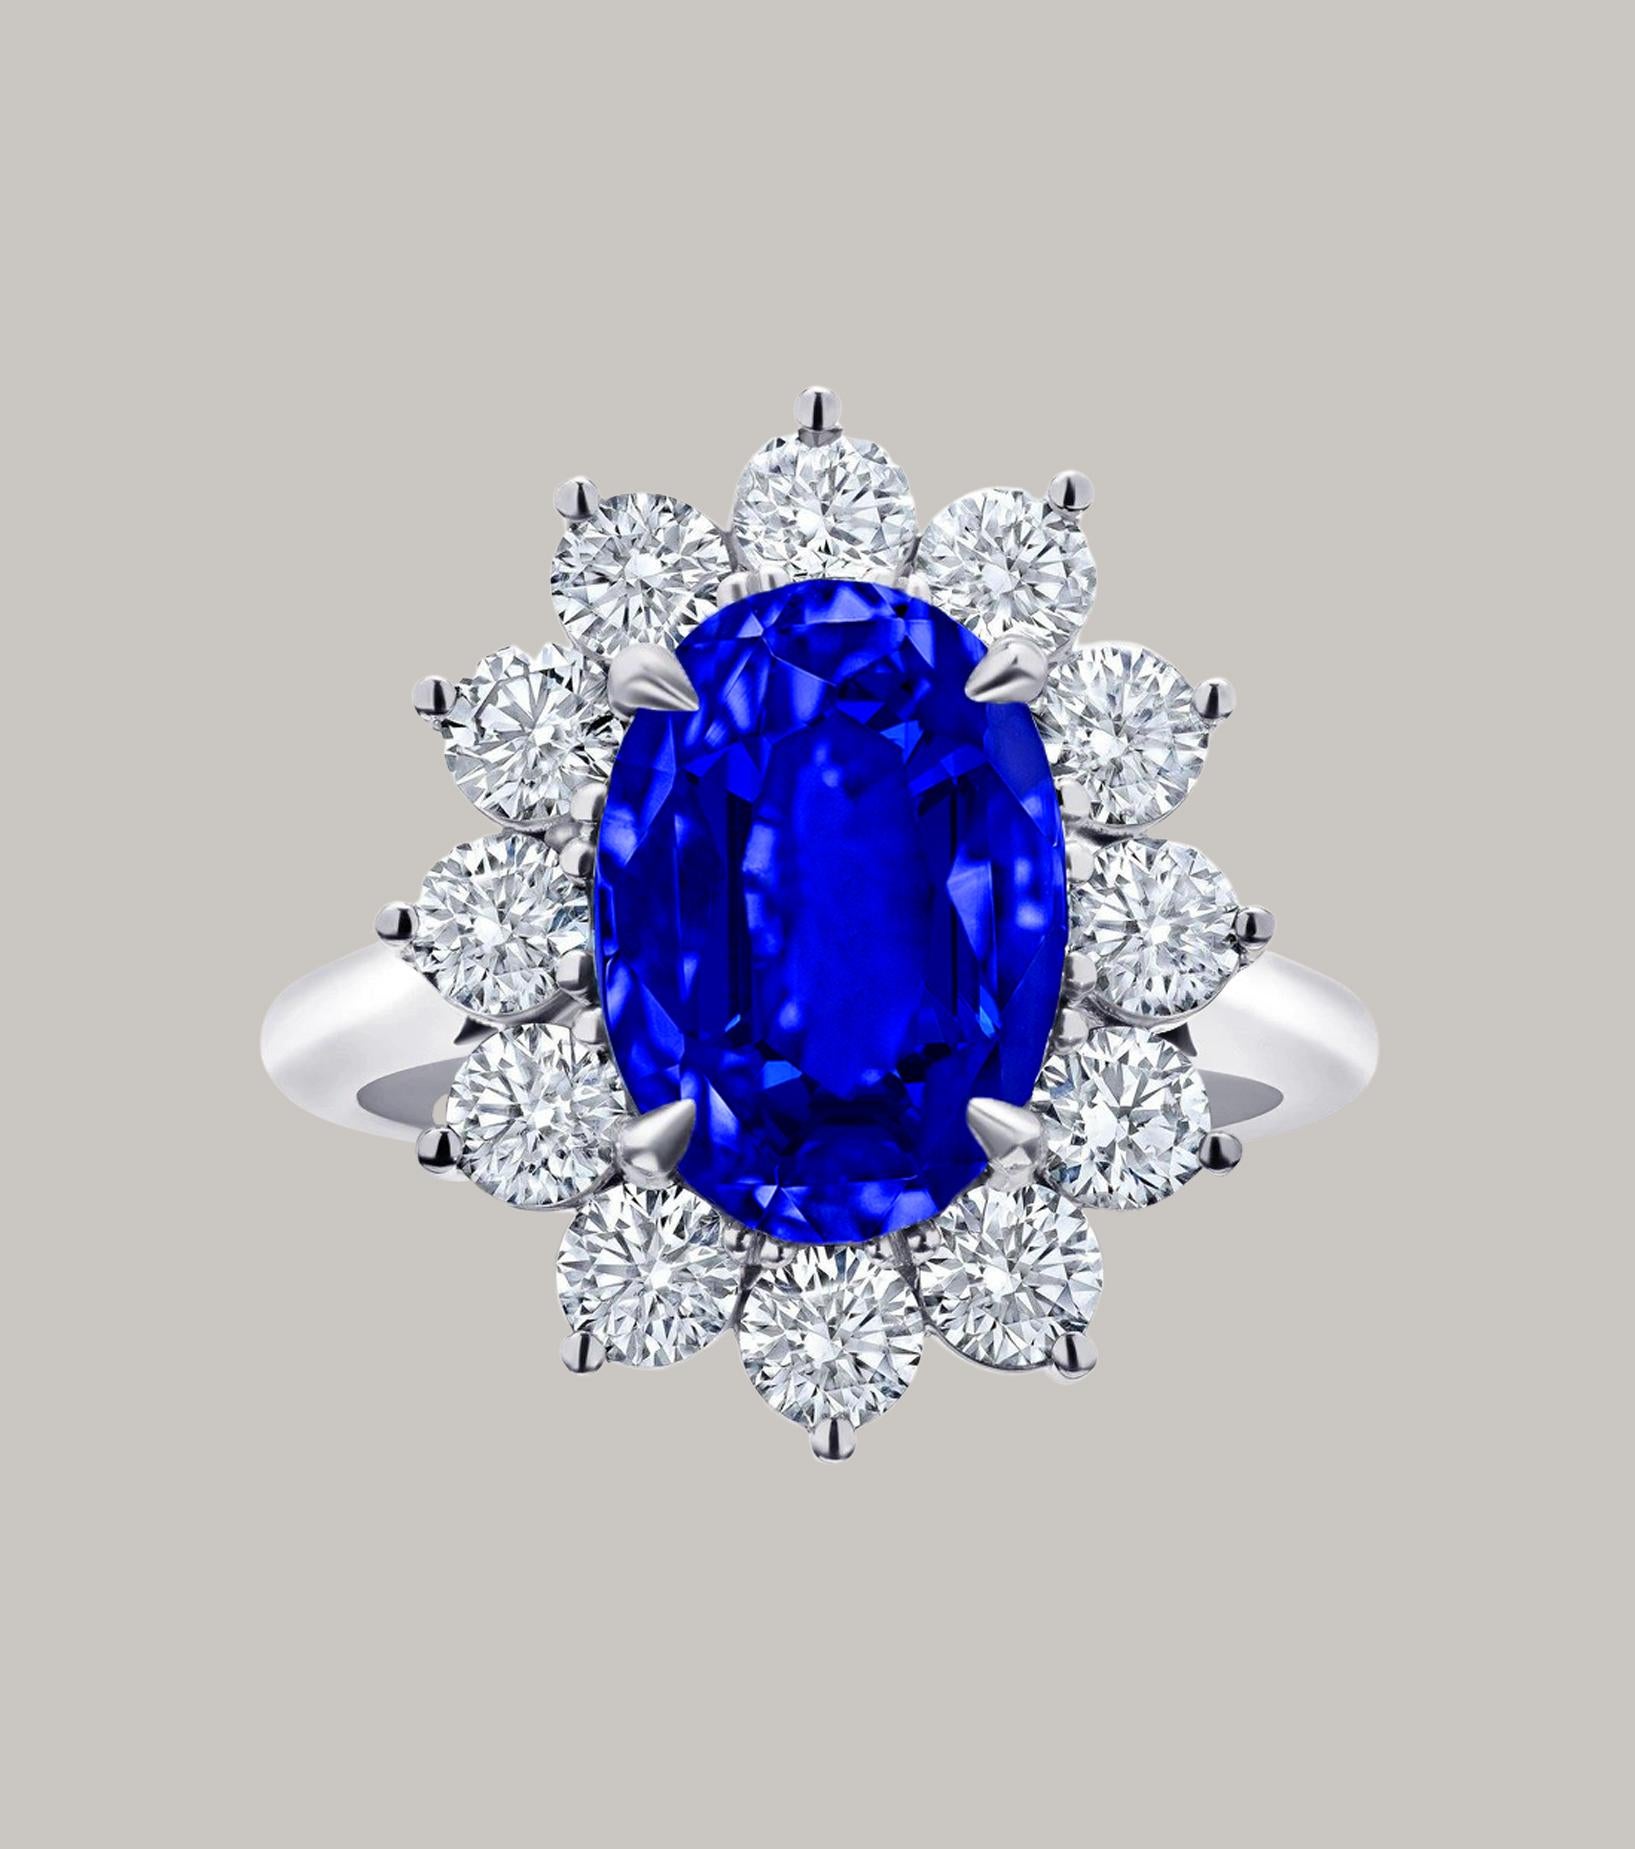 4 carat blue diamond